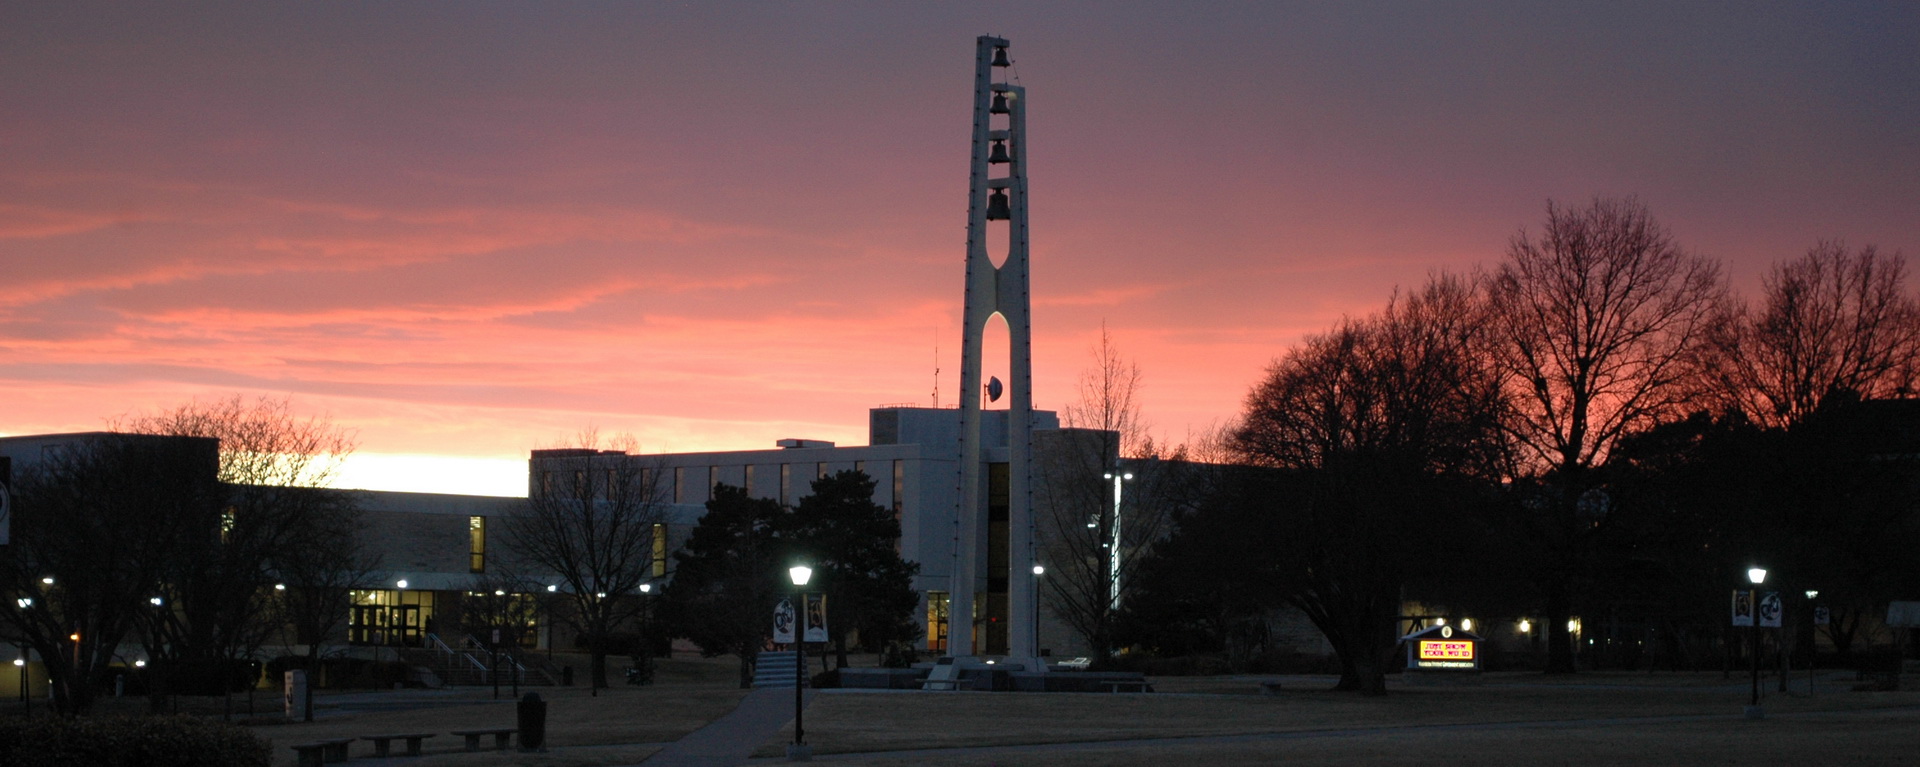 Washburn University Bell Tower at sunset